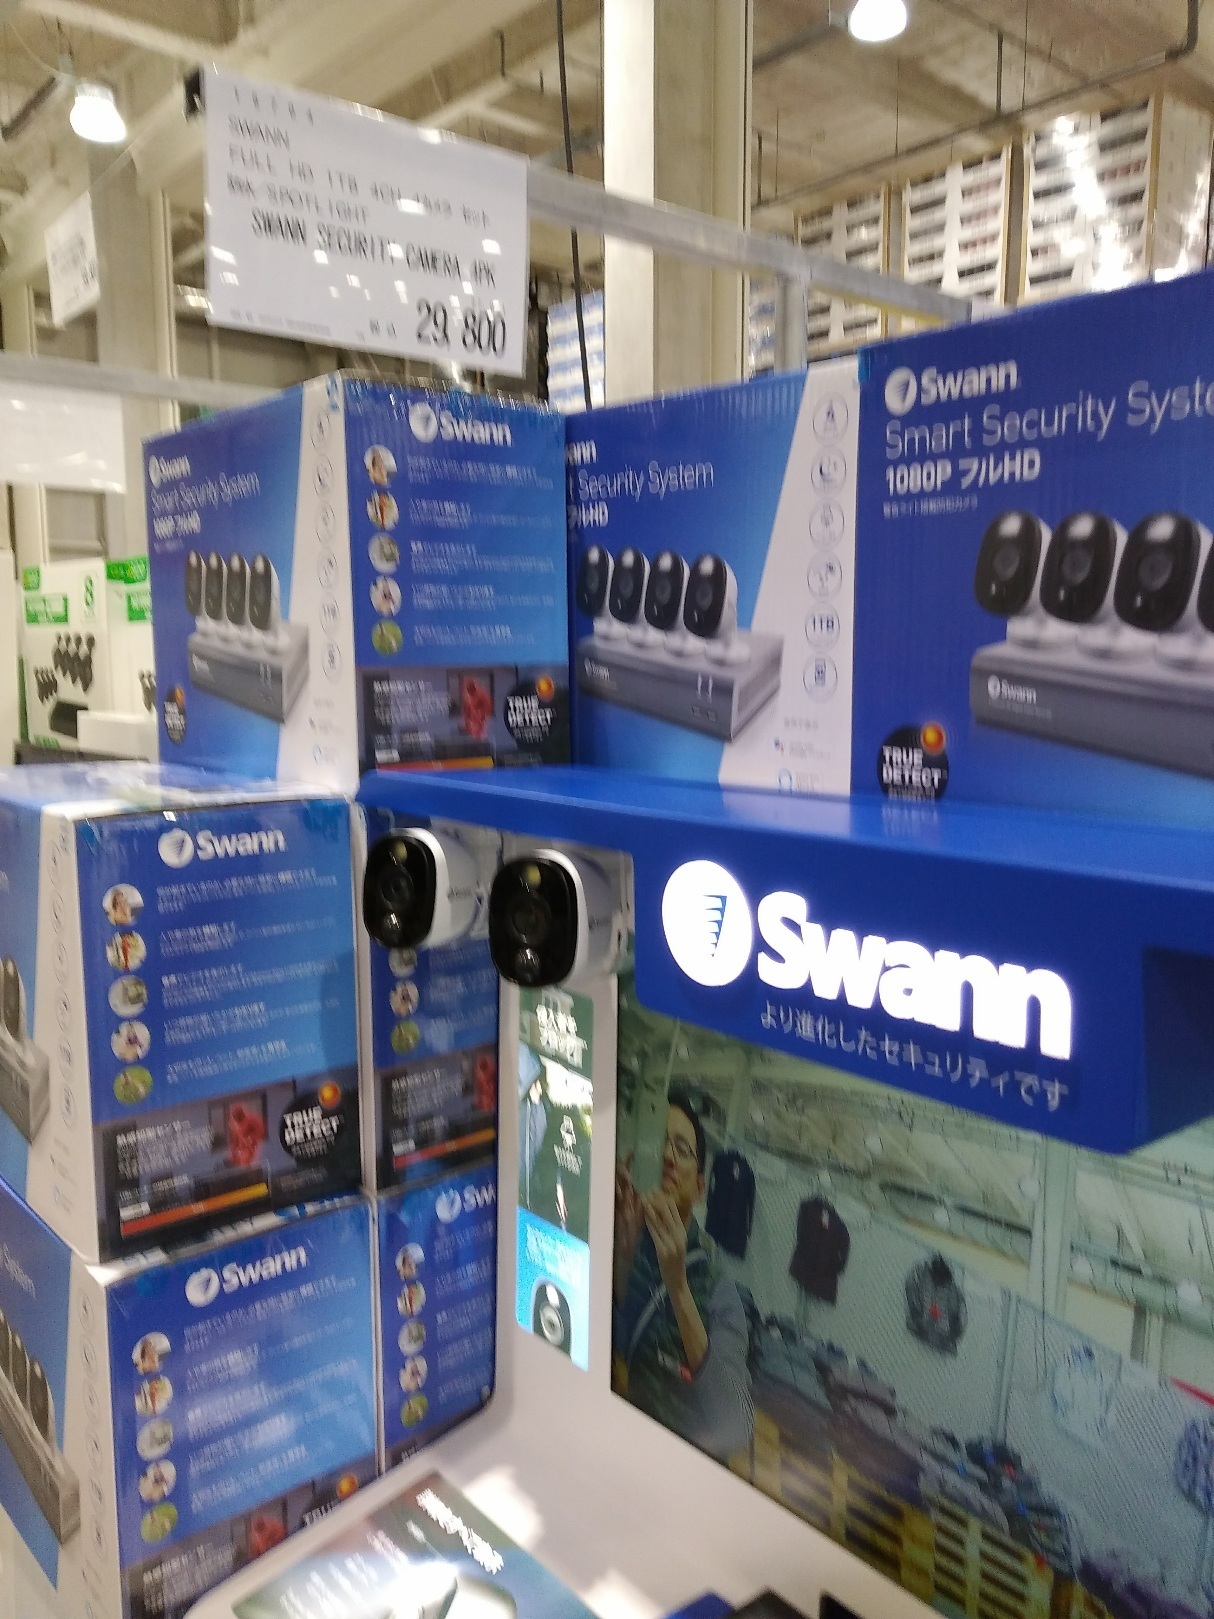 Swann 防犯カメラ Smart Security System が通販できます dgipr.kpdata